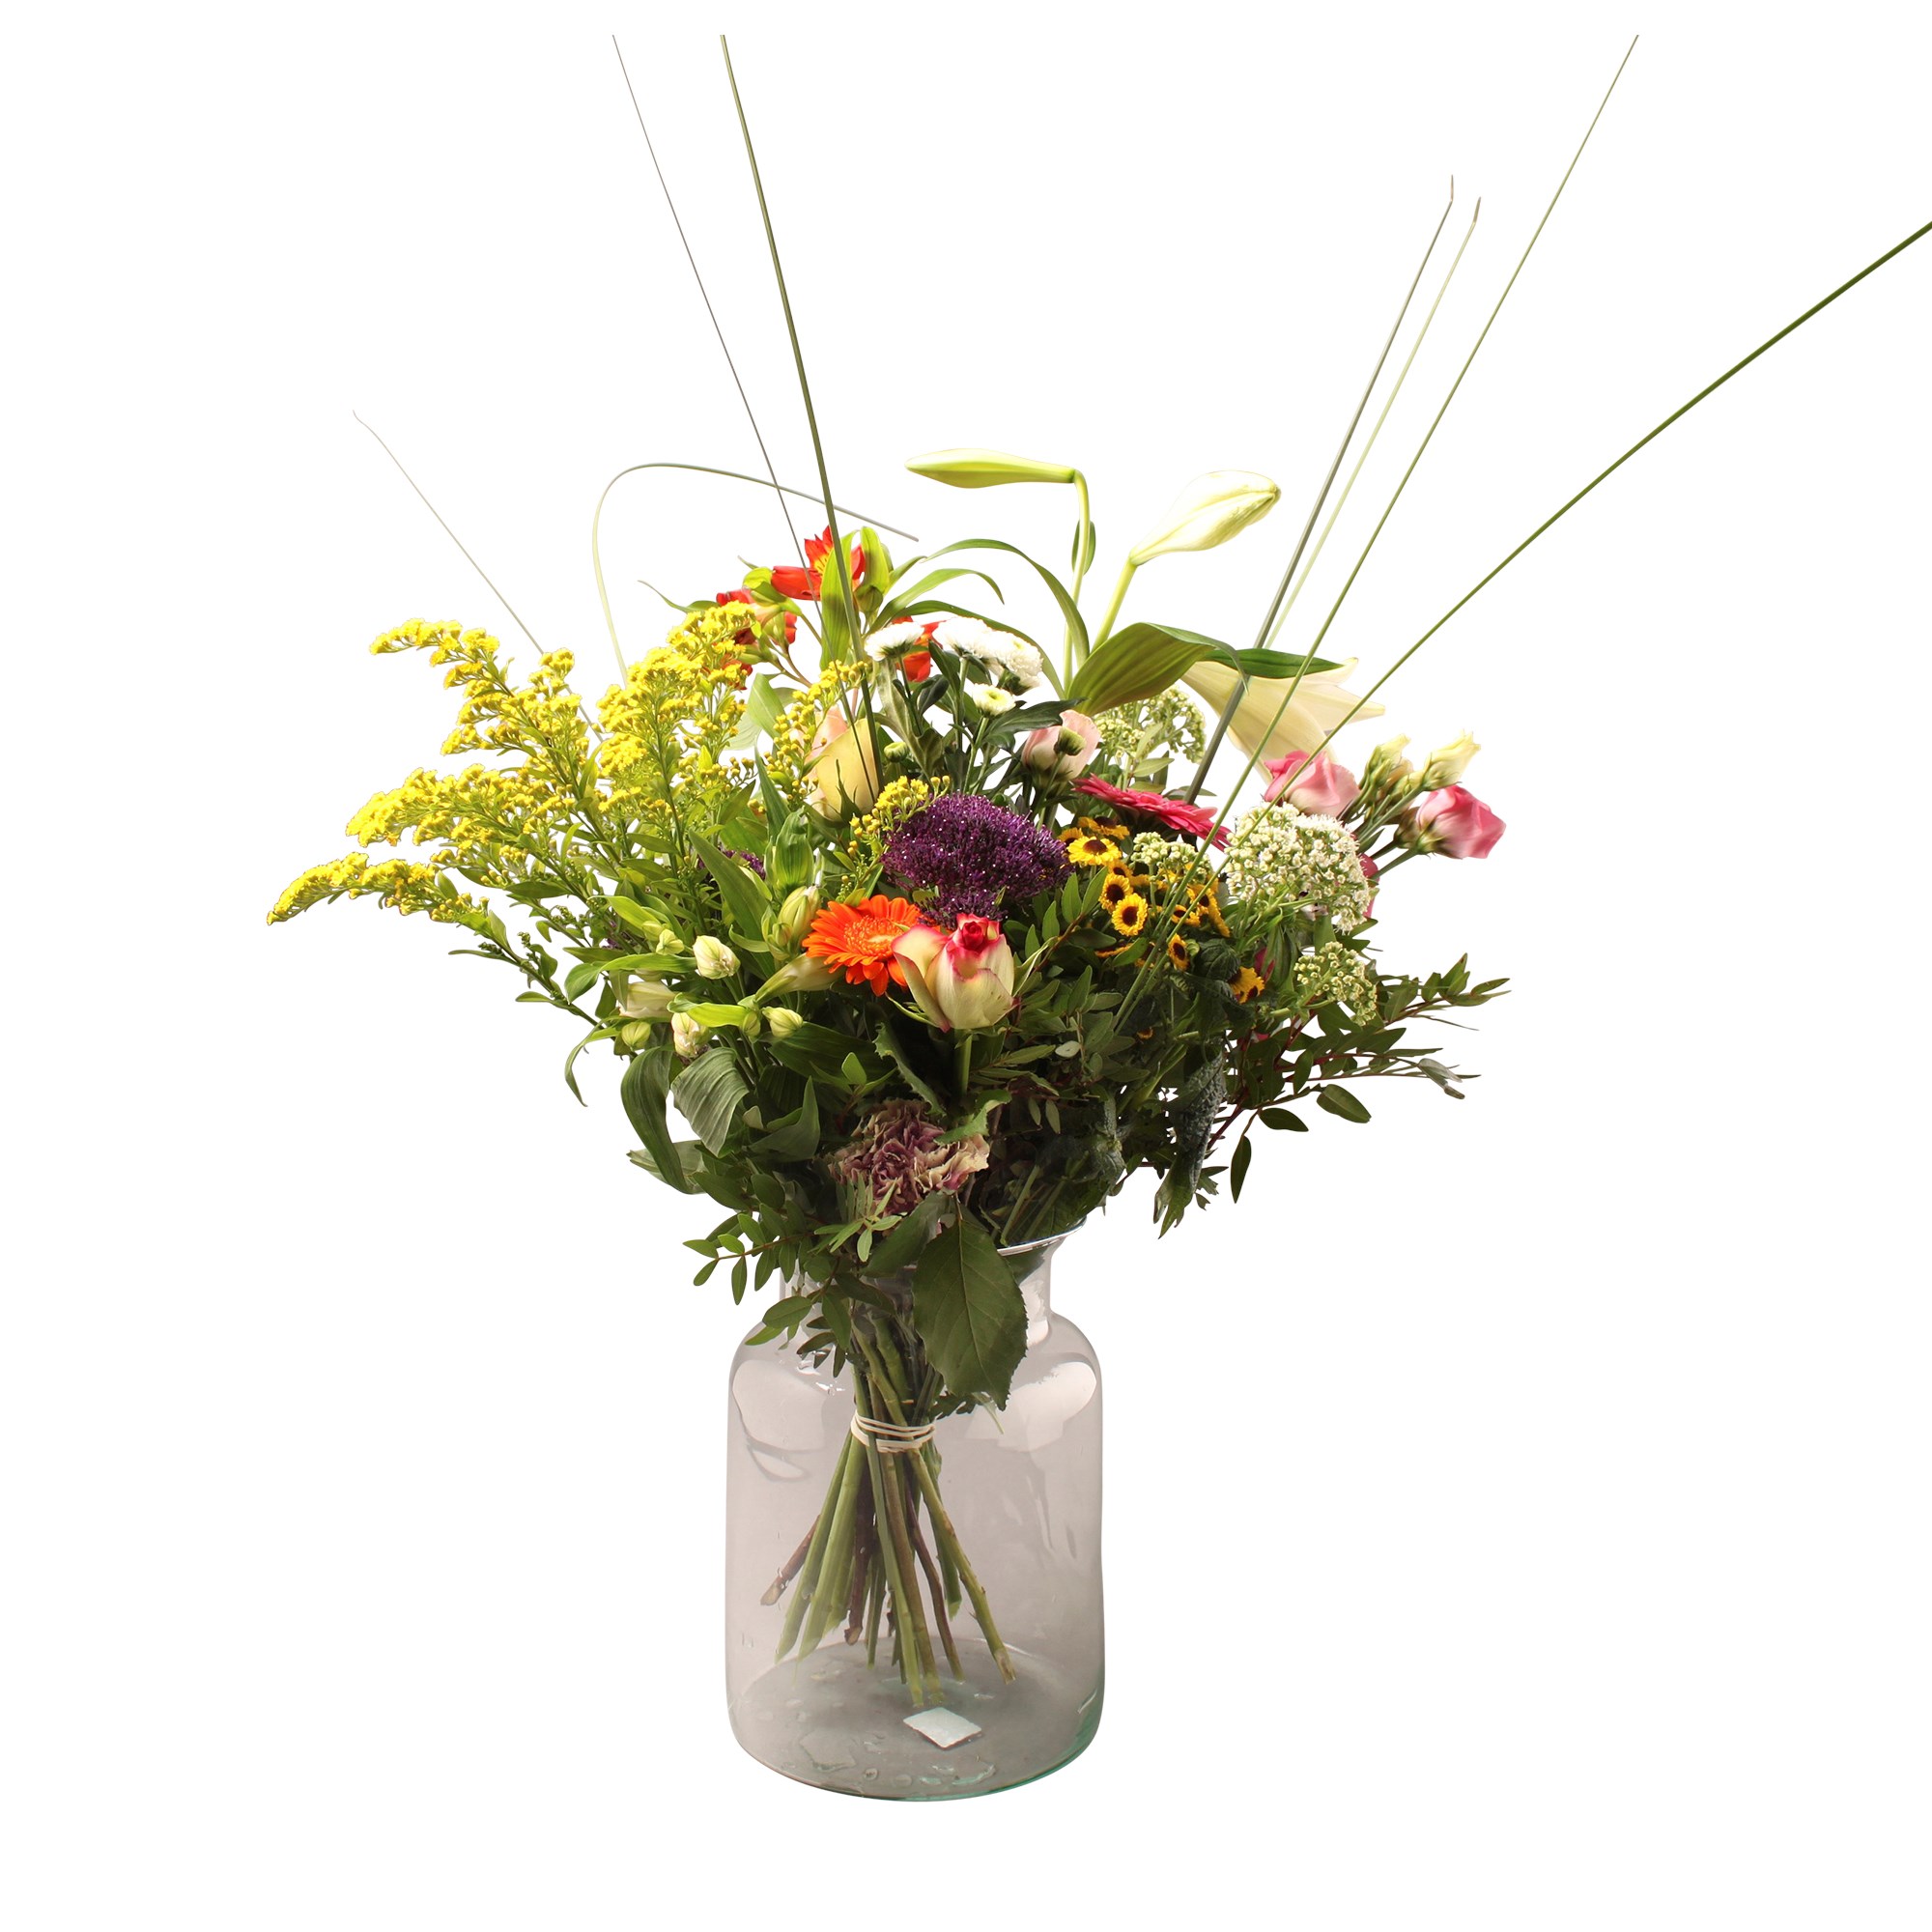 Harlequin bouquet with vase